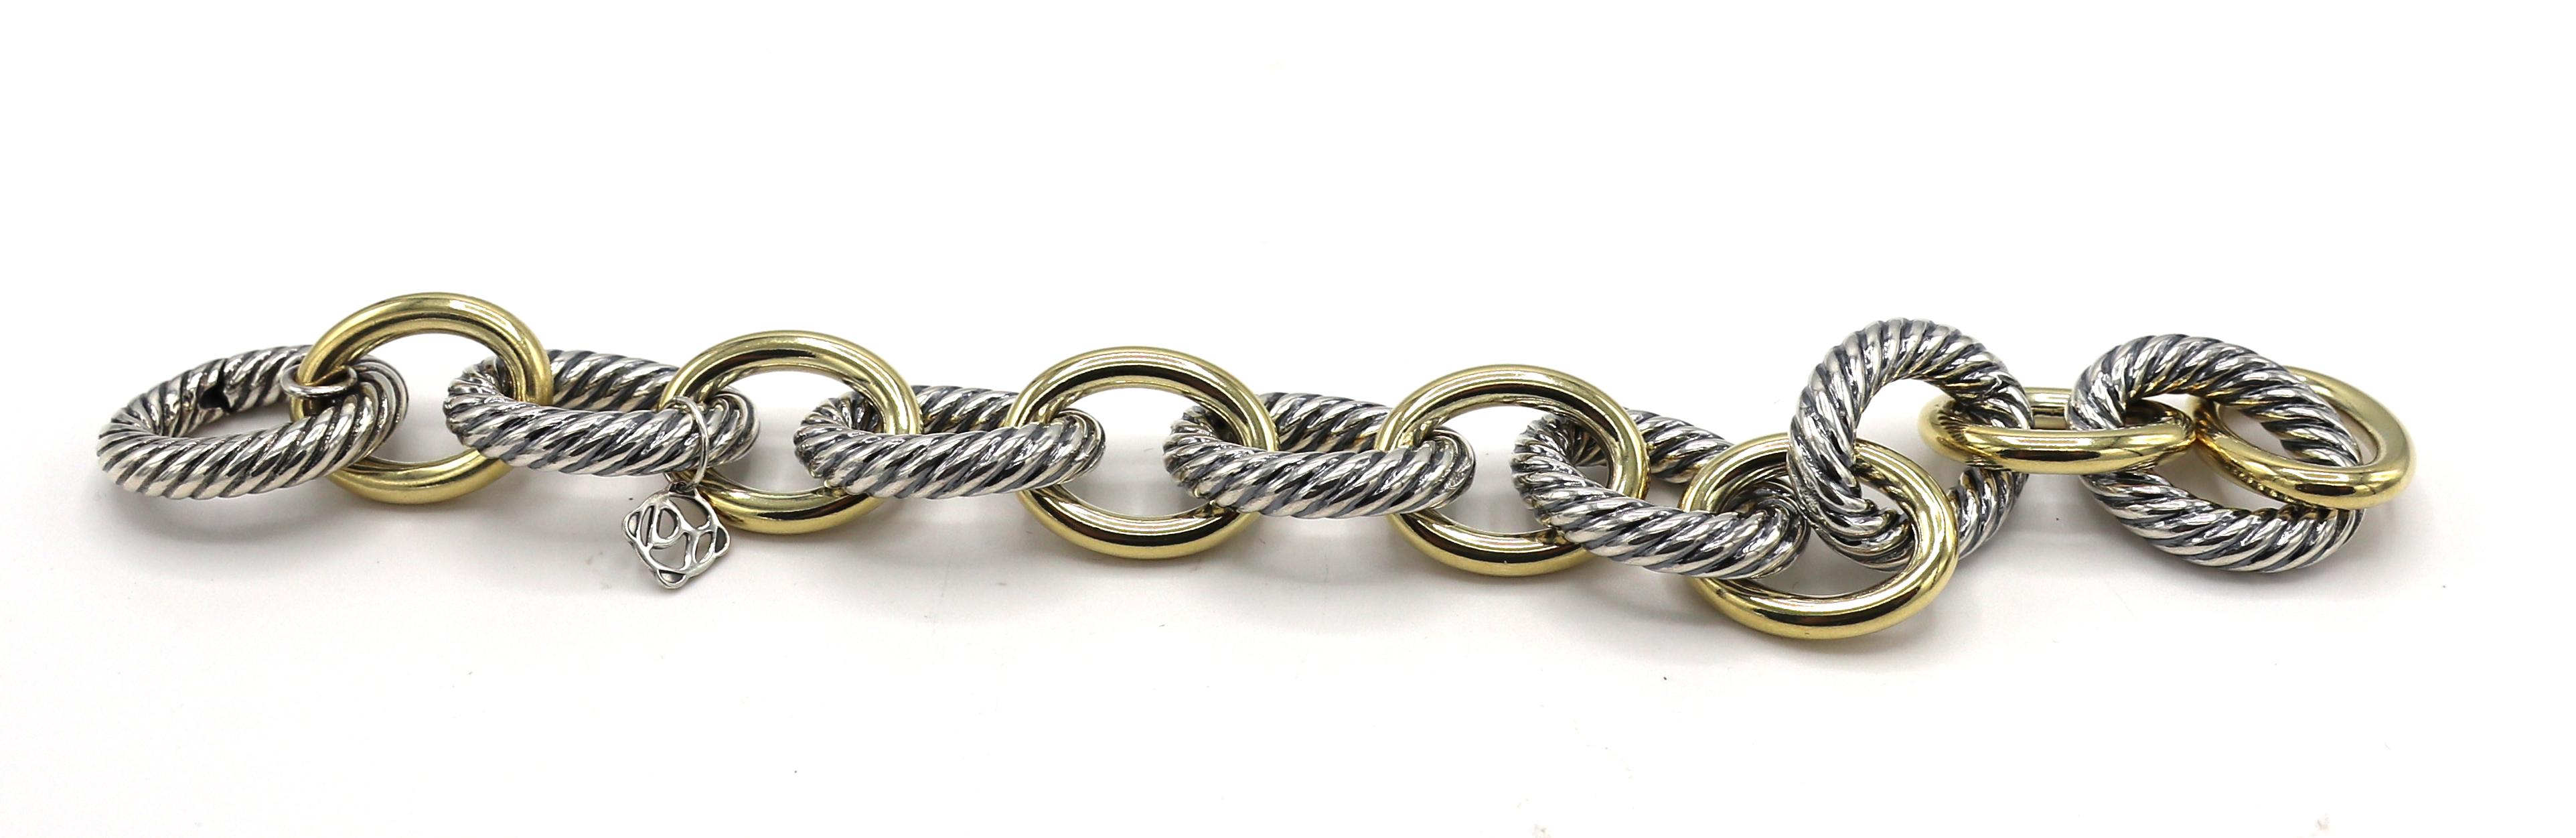 david yurman chain bracelet